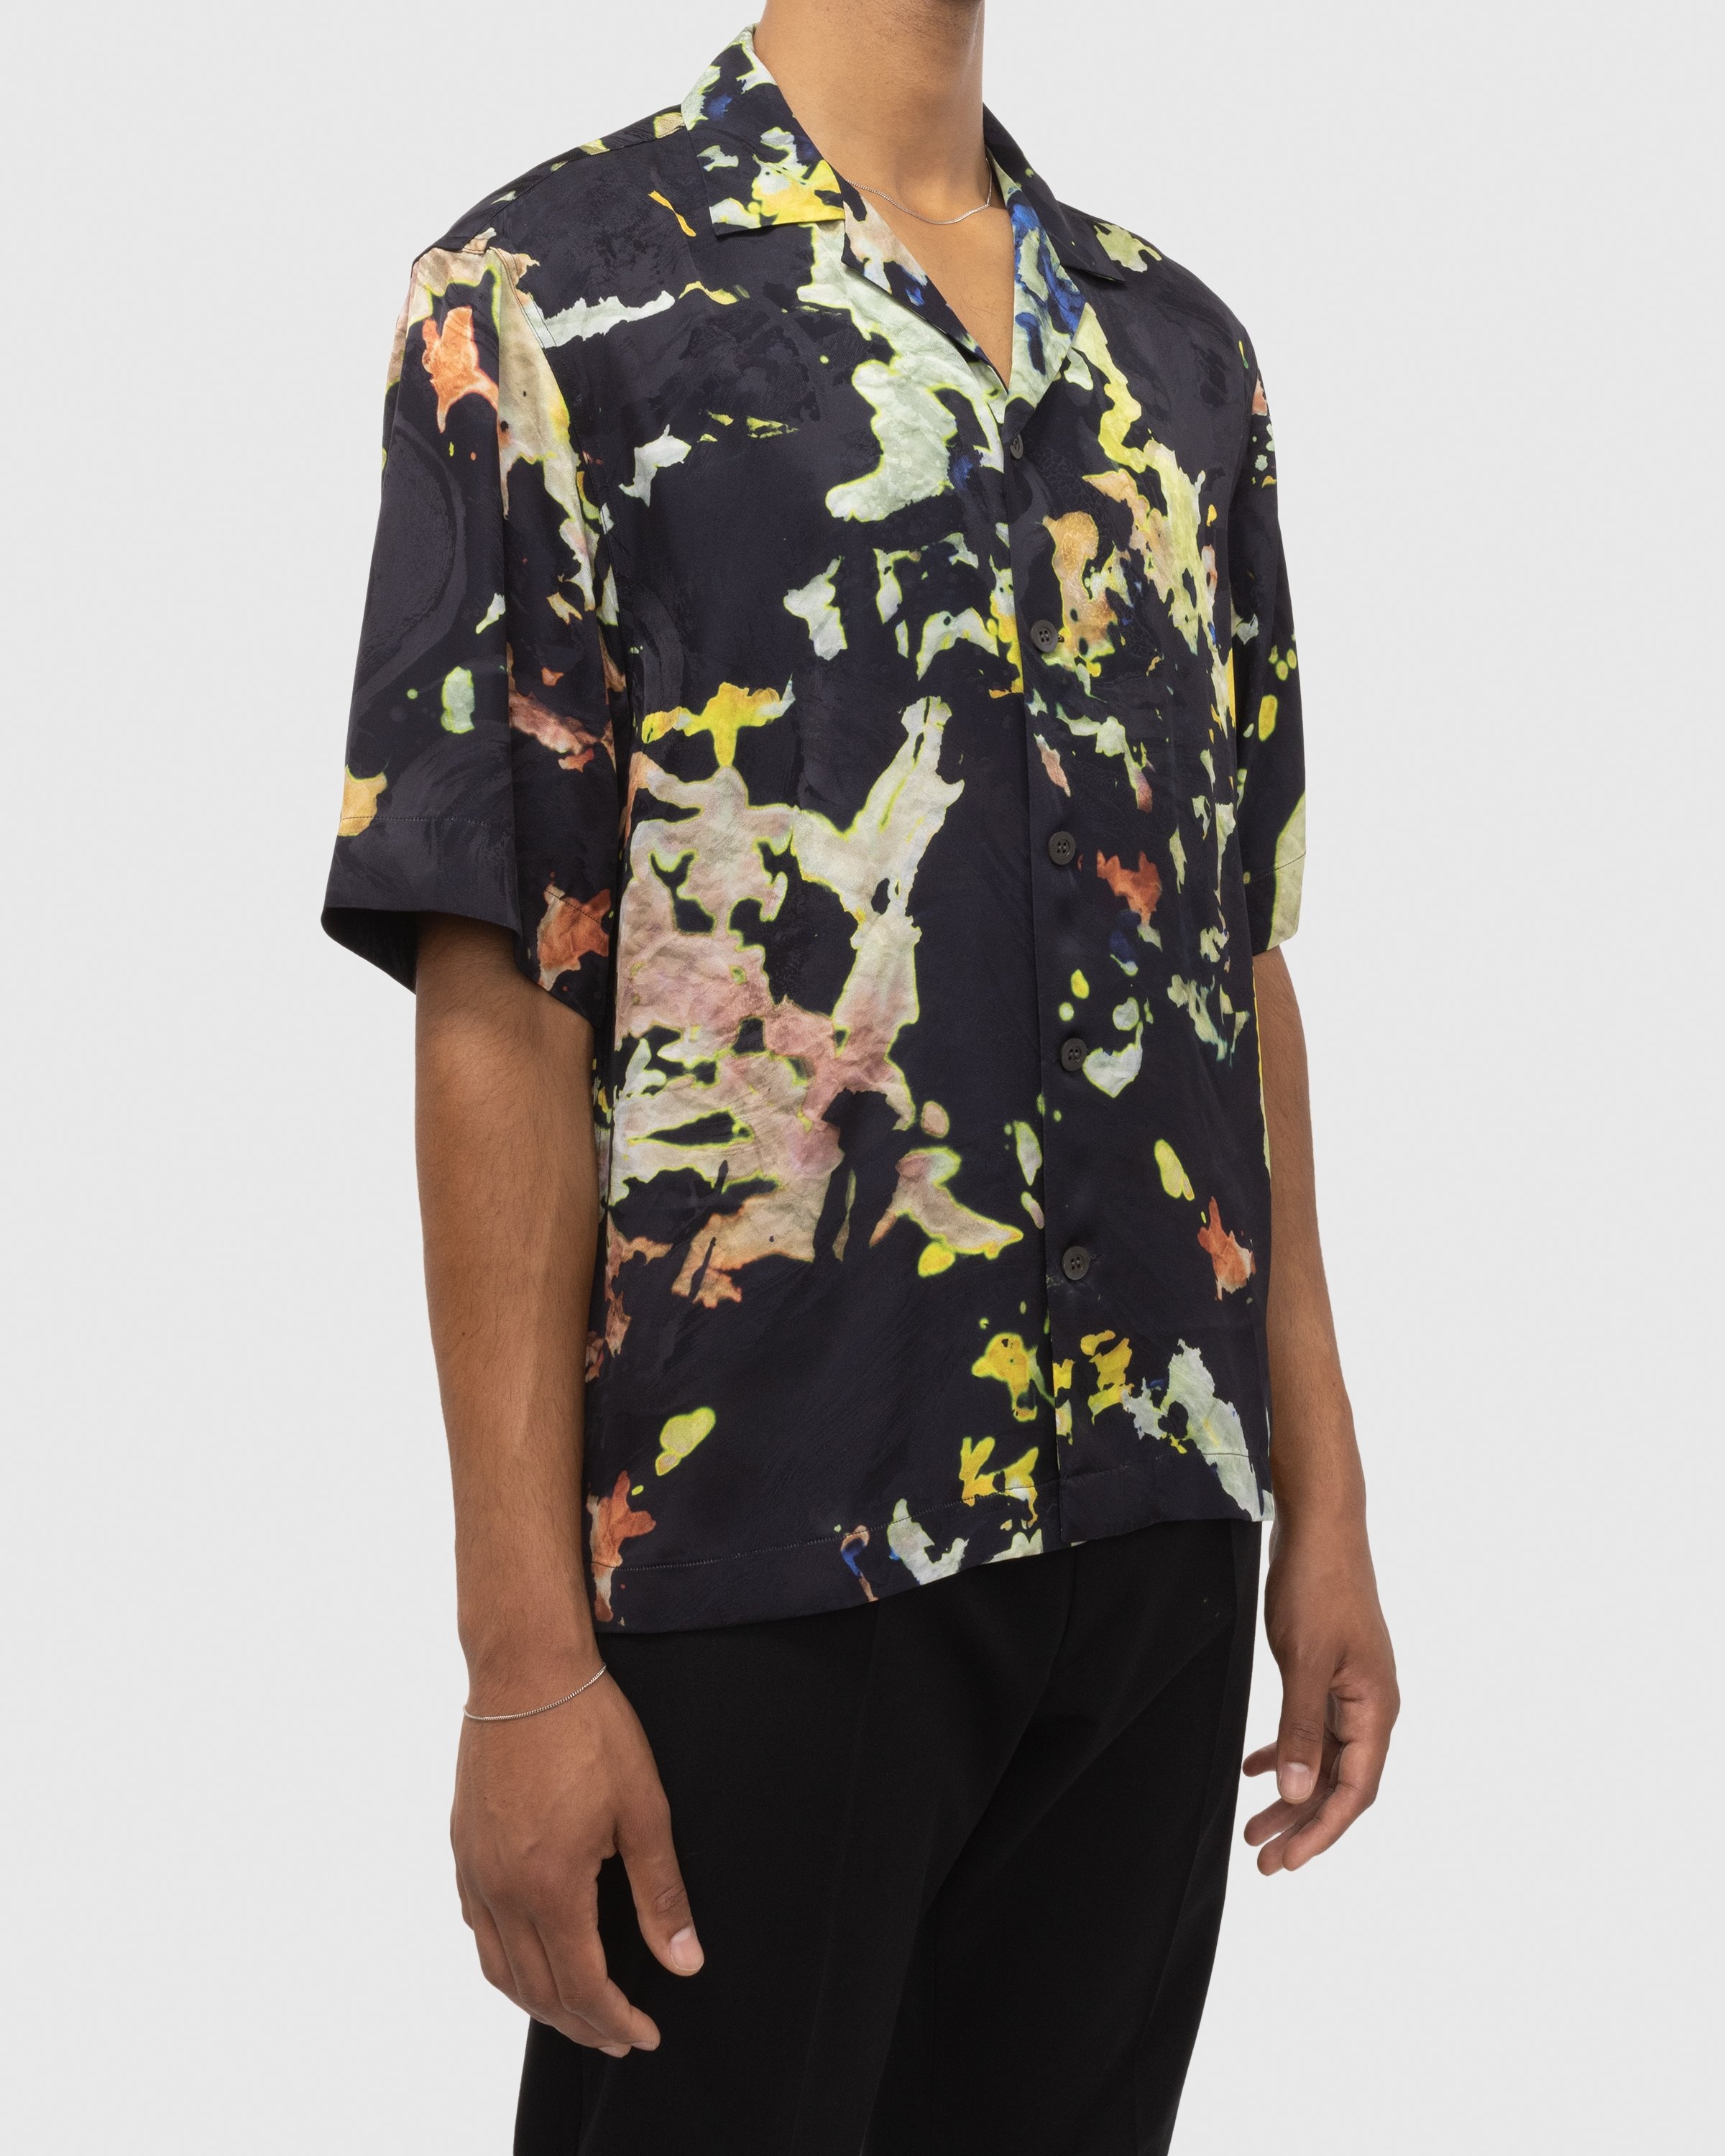 Dries van Noten – Jacquard Cassi Shirt Multi - Shortsleeve Shirts - Multi - Image 2